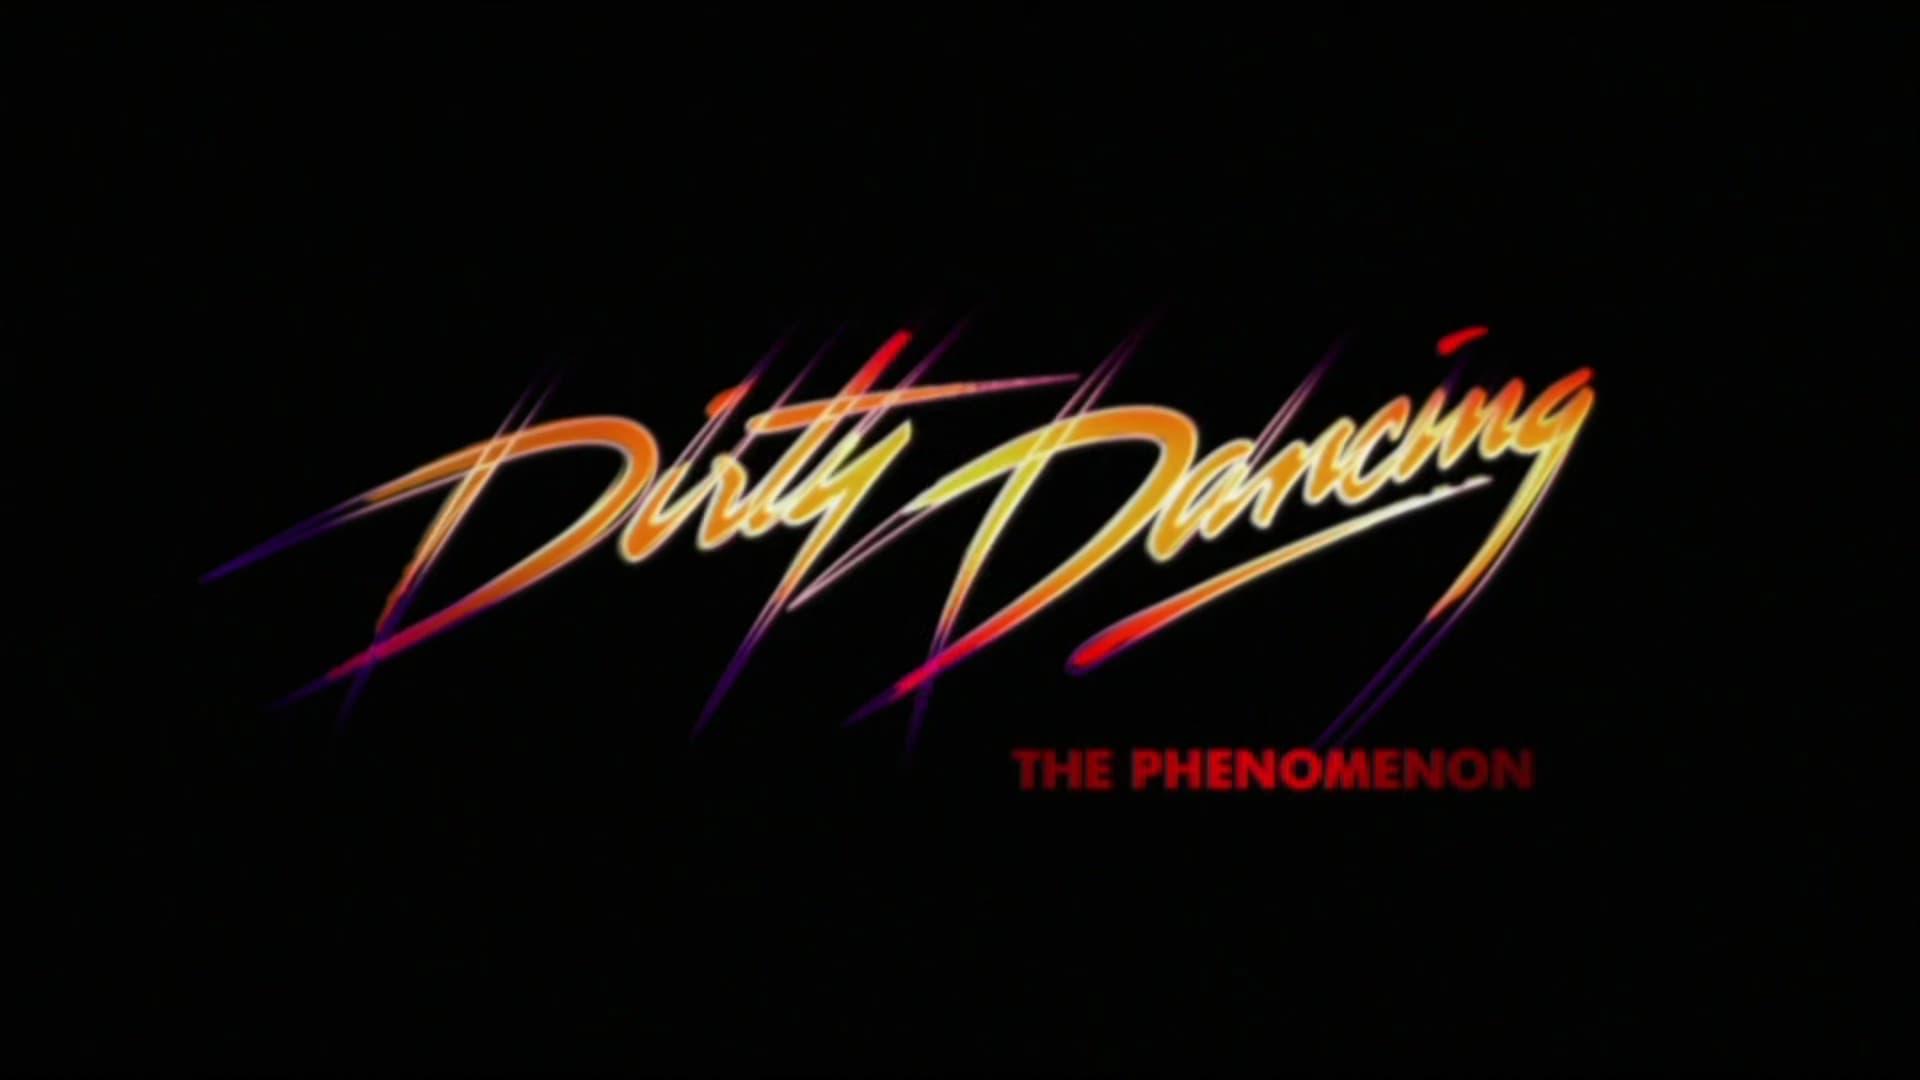 Dirty Dancing - The Phenomenon backdrop